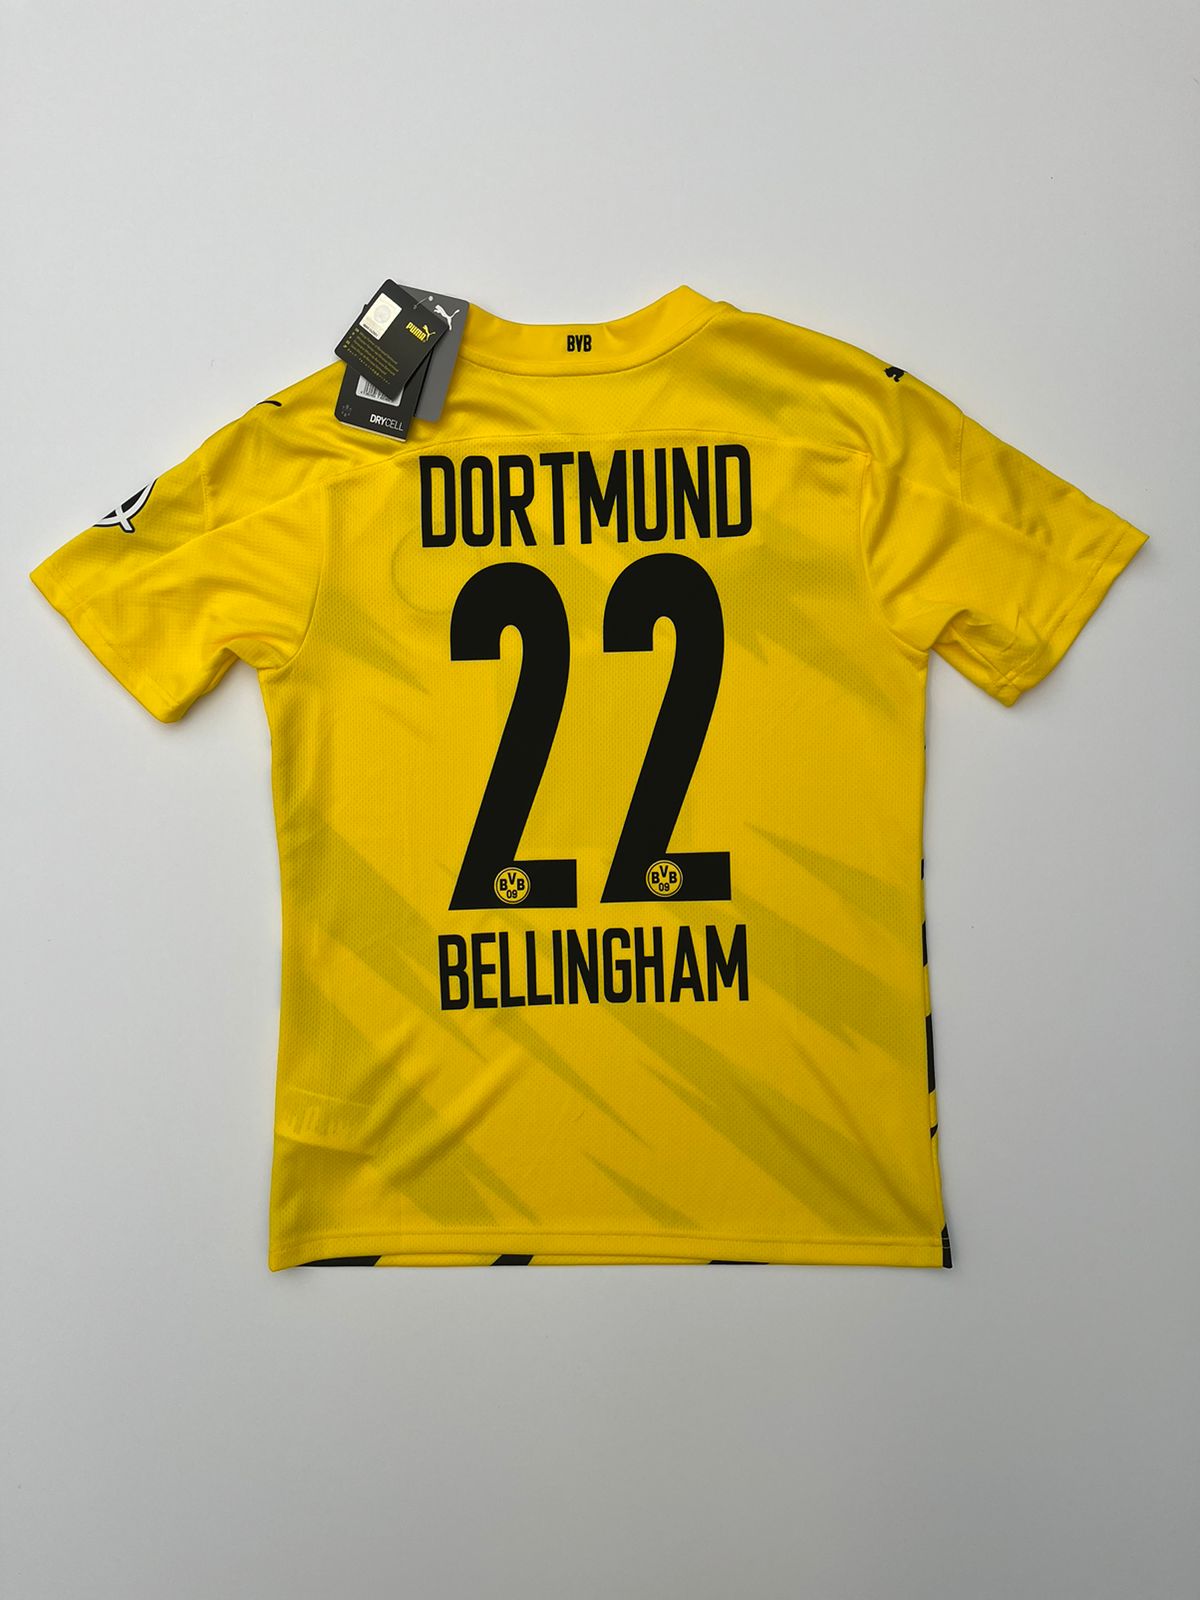 Jersey Borussia Dortmund Local 2020 2021 Jude Bellingham (S)